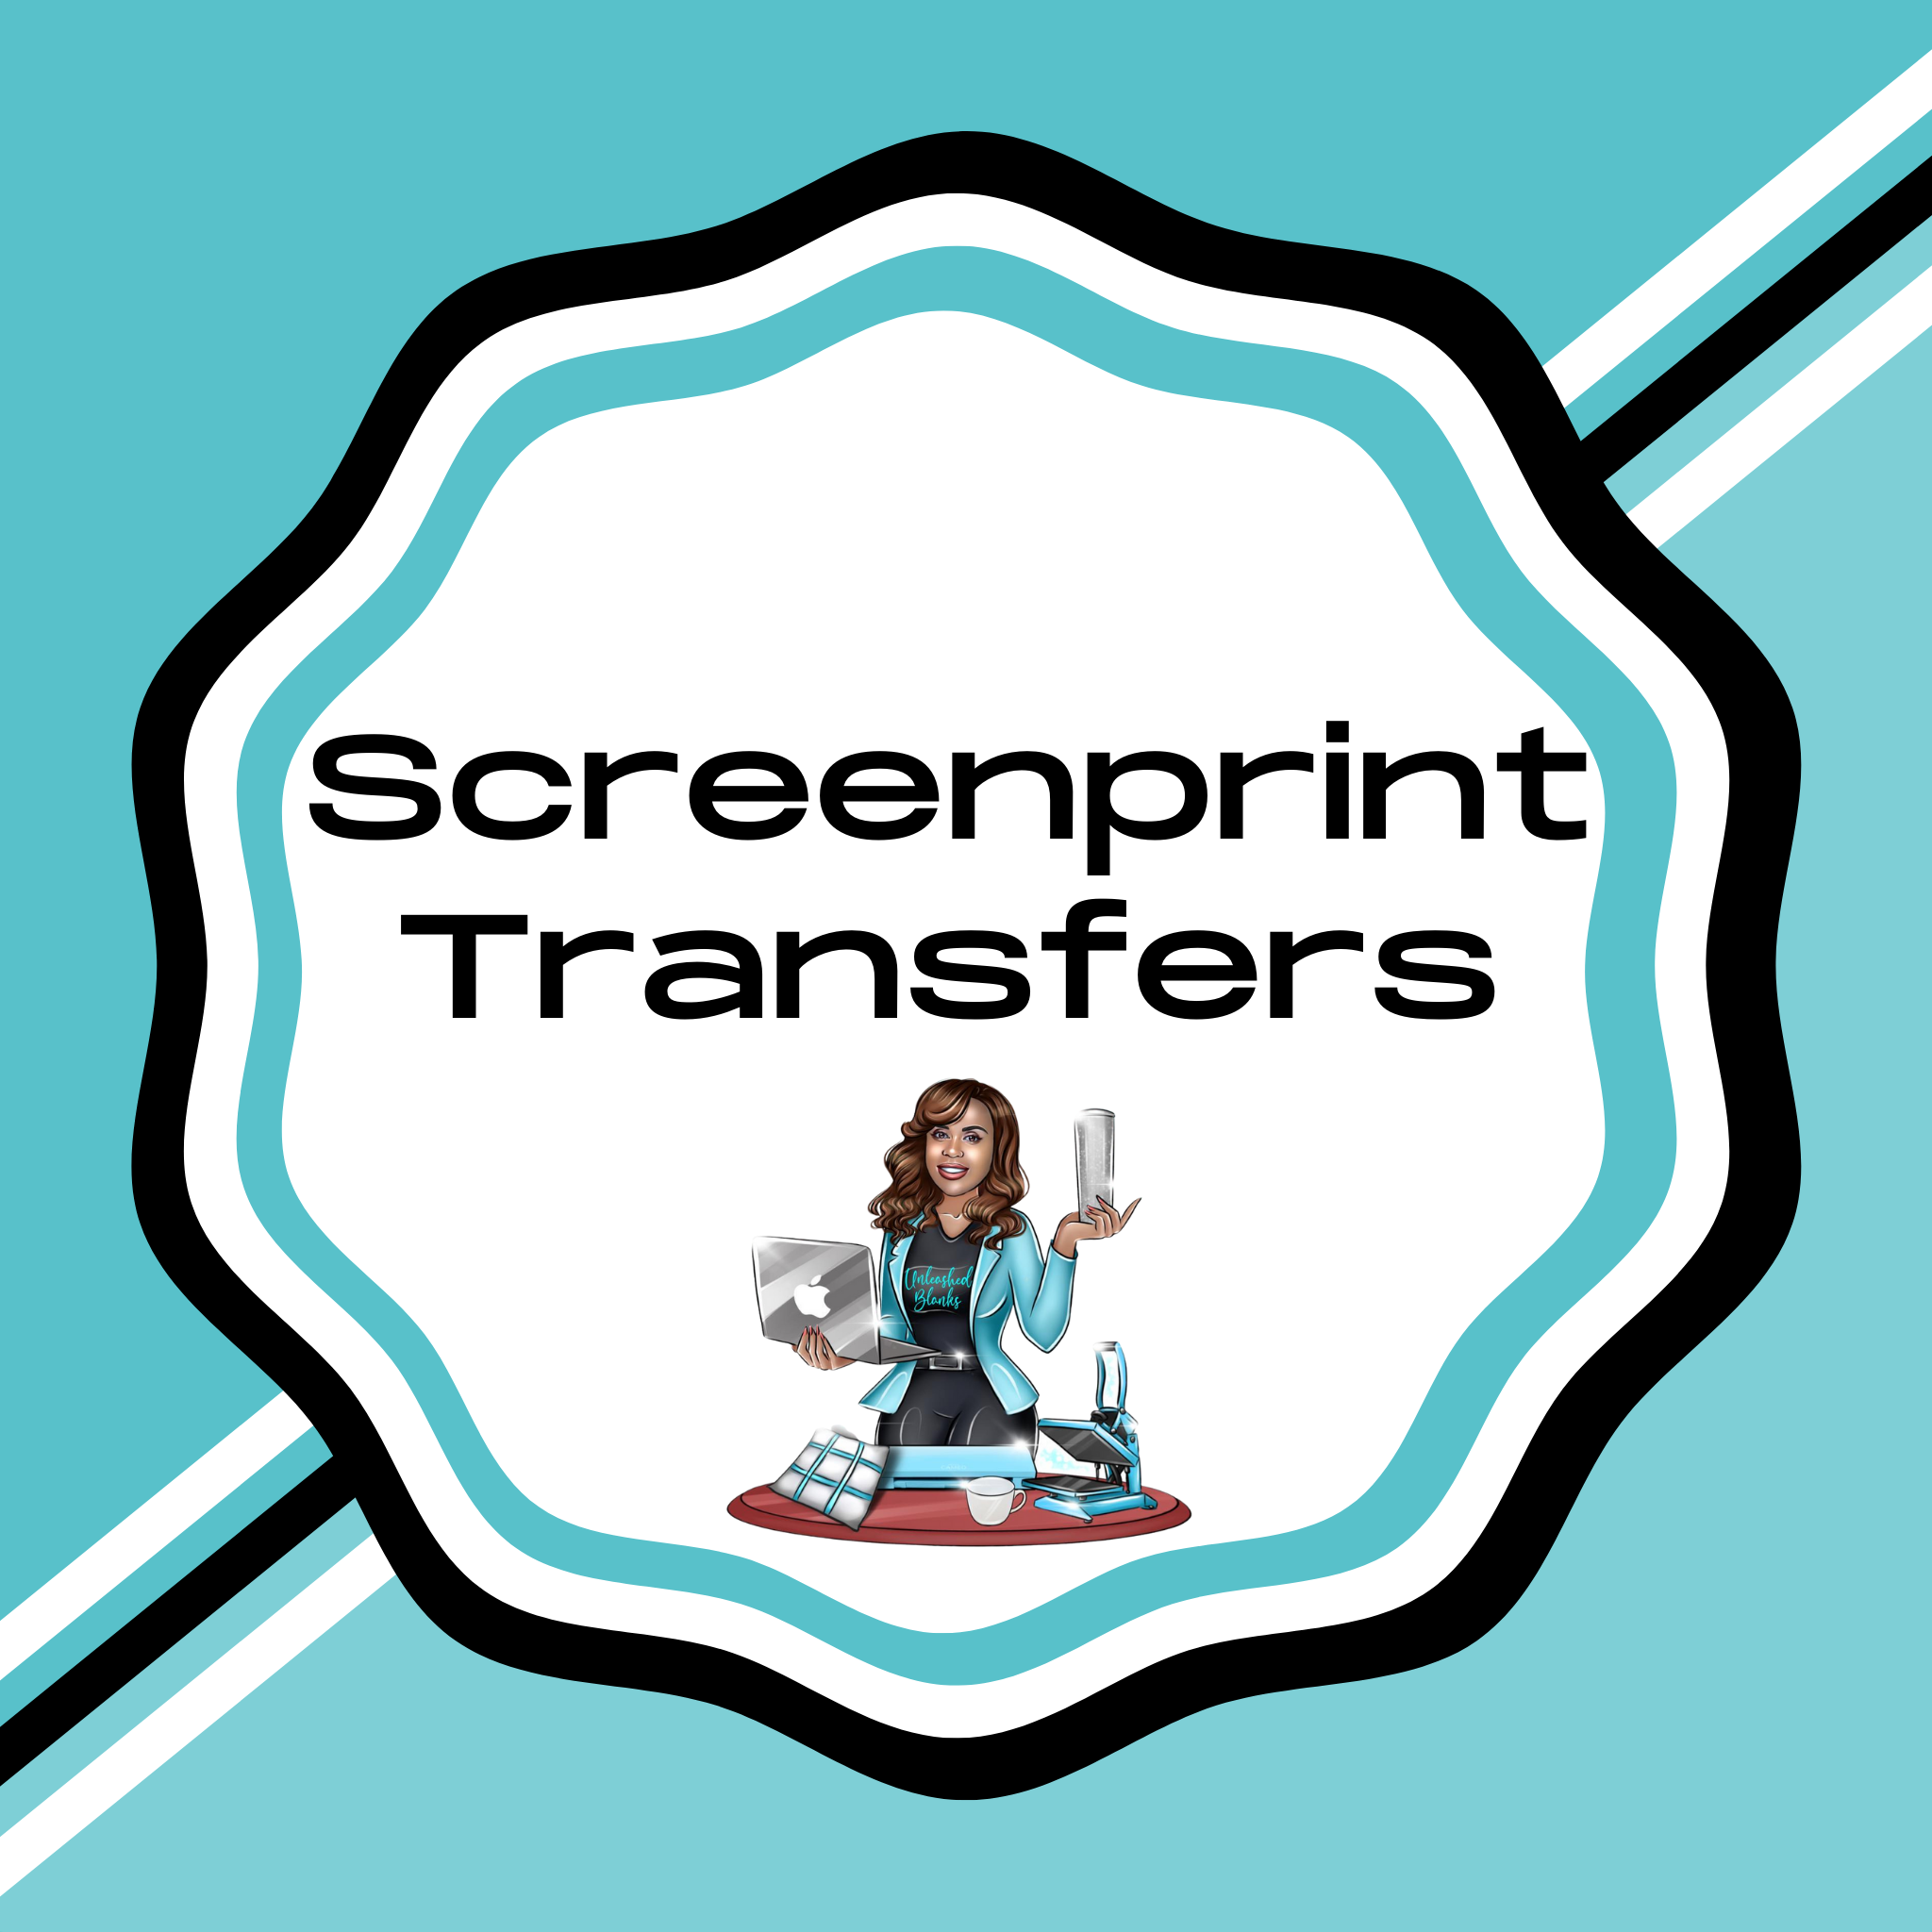 Screenprint Transfers